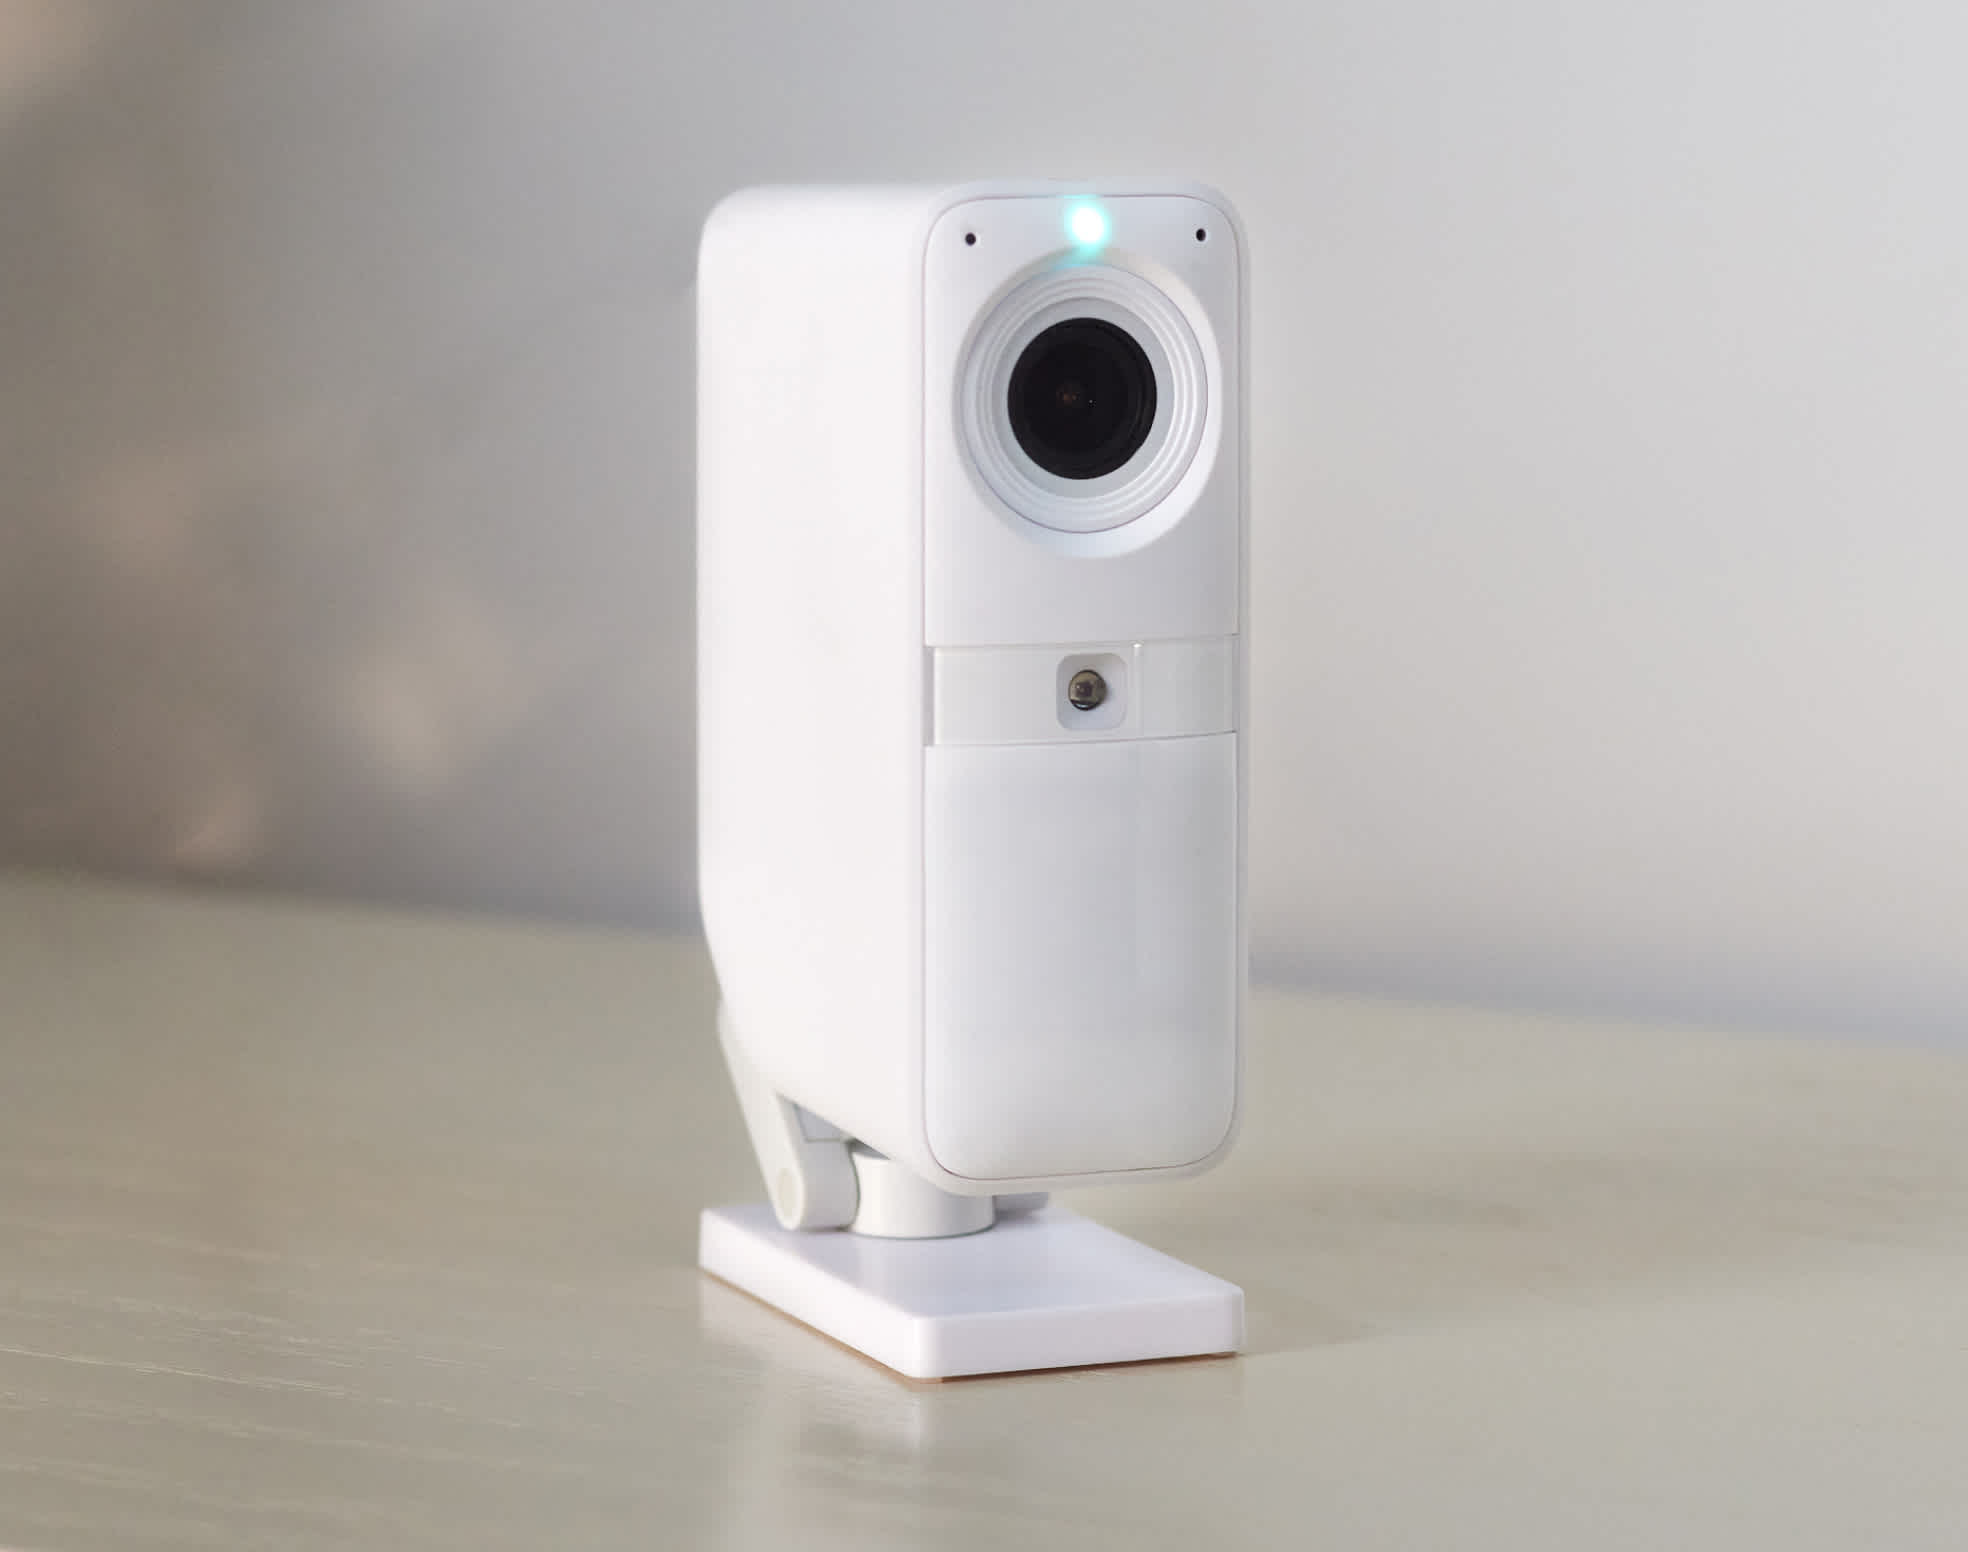 Simplisafe Camera Sscm1  : Top-rated Surveillance Solution